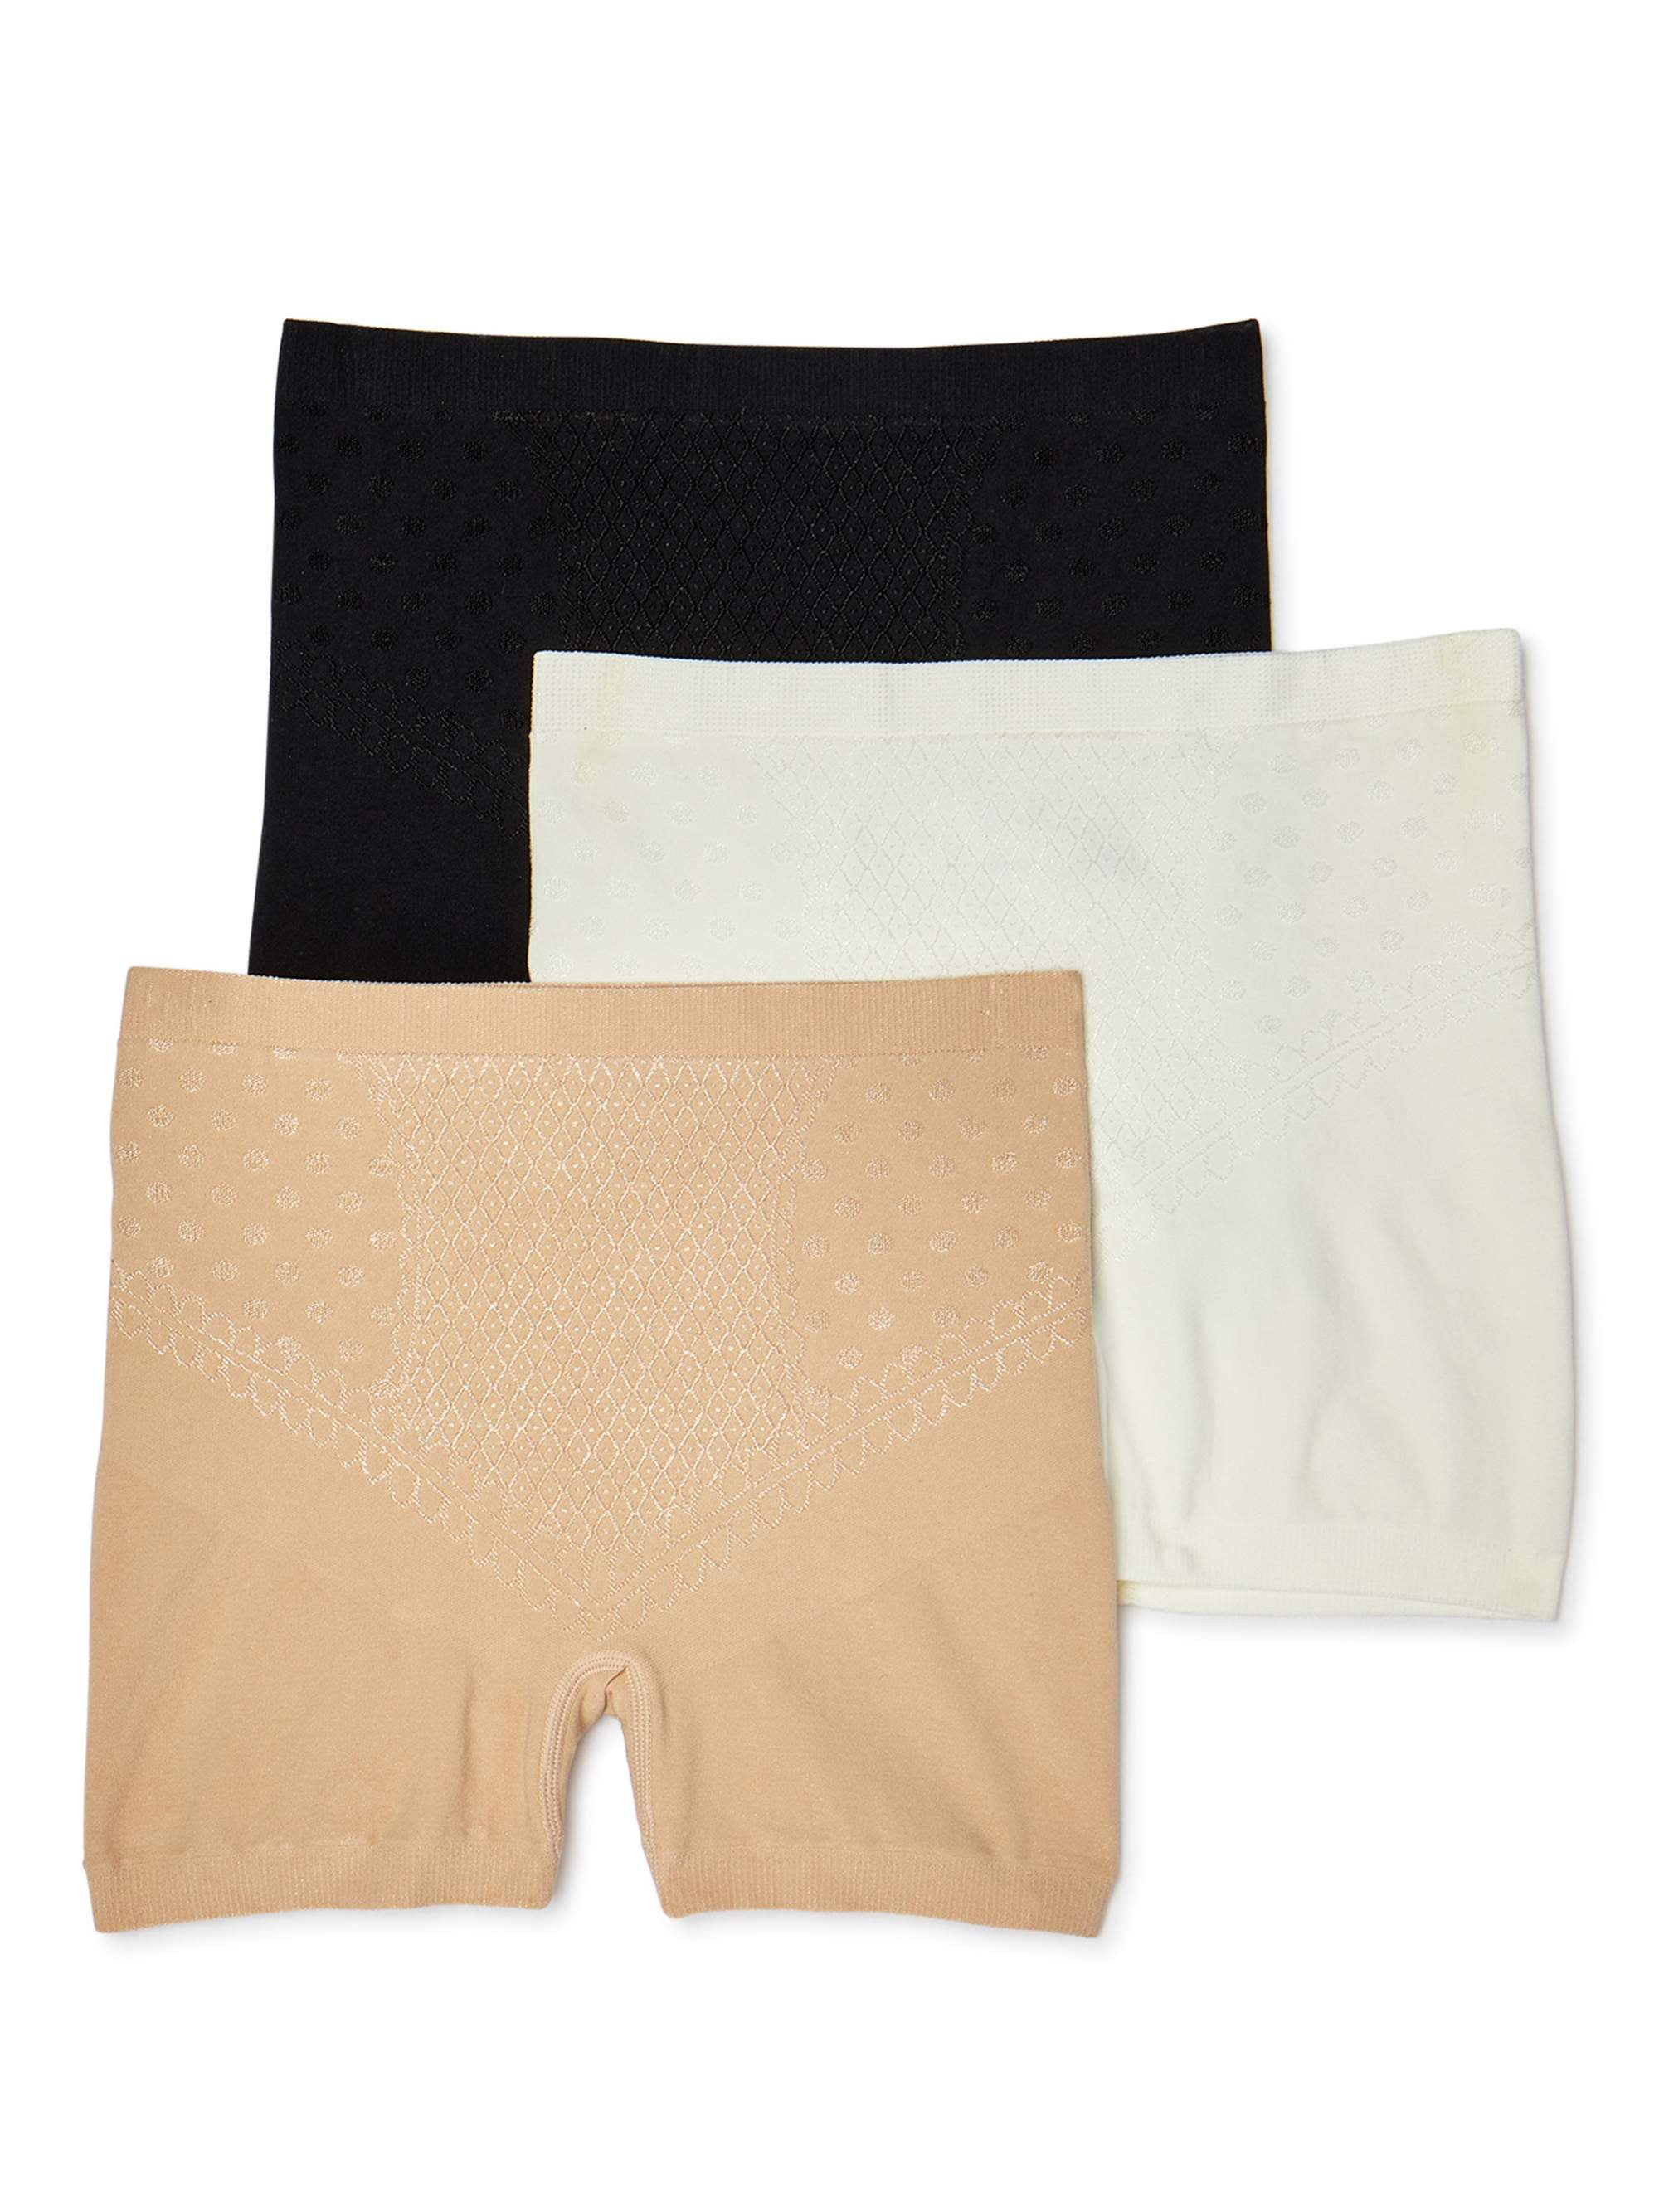 Lovito Casual Plain Boyshorts Seamless Safety Pants for Women L48L092  (Apricot/Grey/Black)